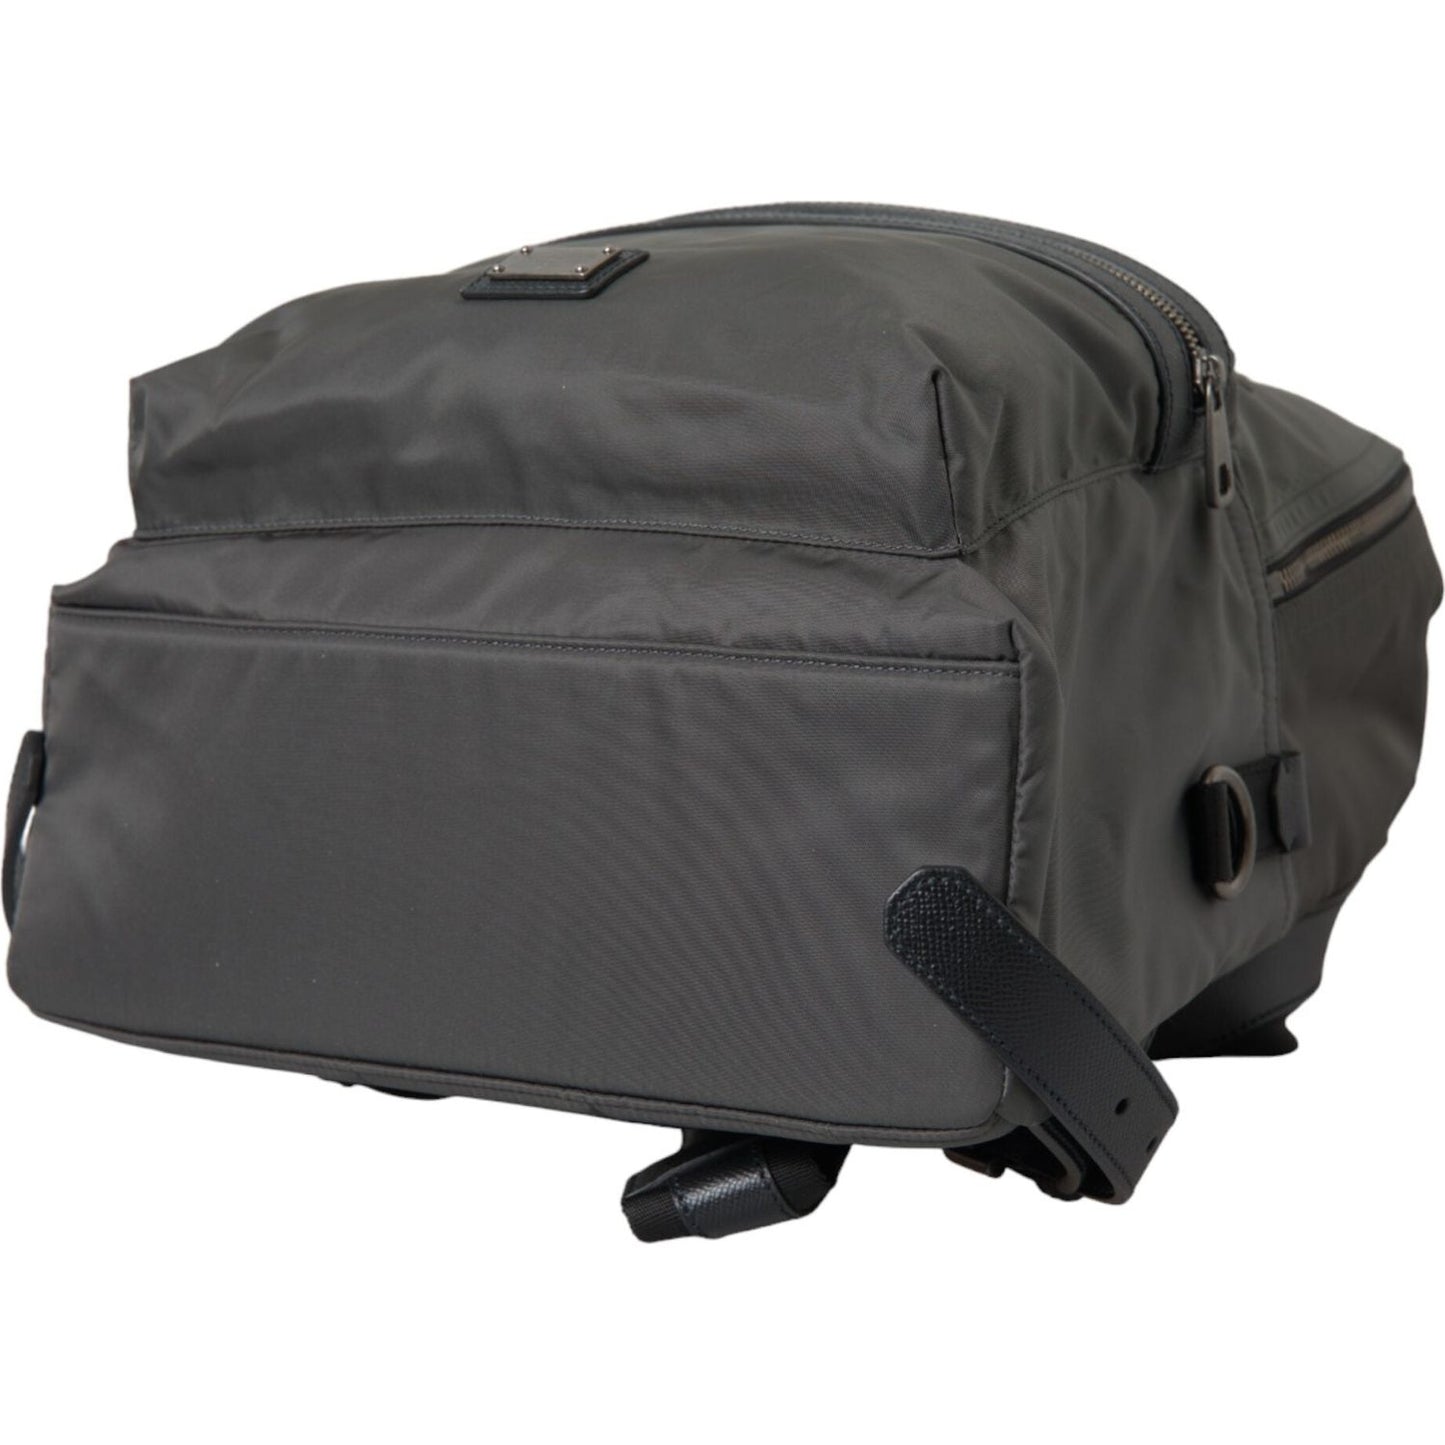 Dark Gray Nylon #DGFamily Patch Men Backpack Bag